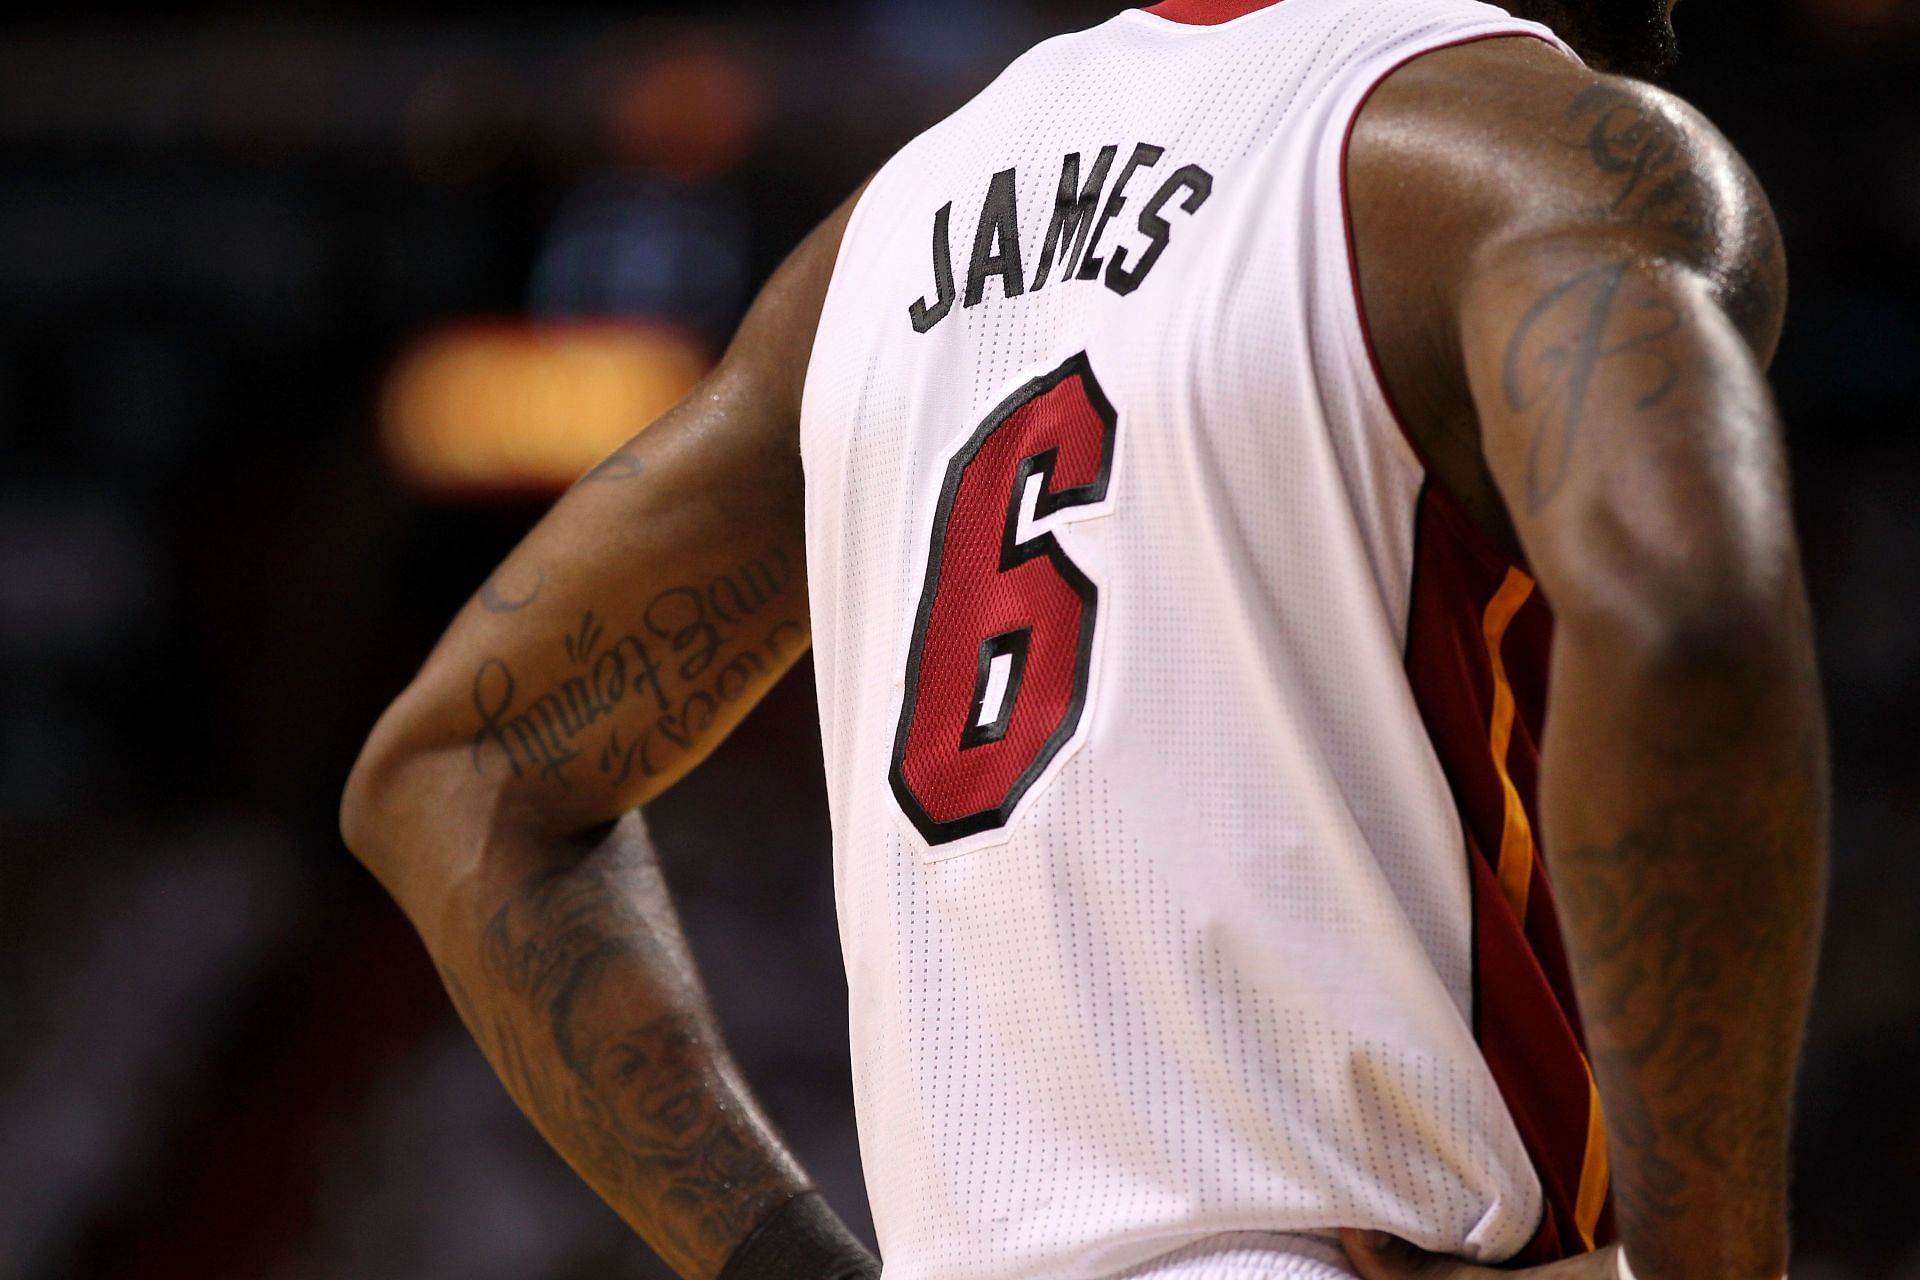 James of the Miami Heat during the 2011-12 season.